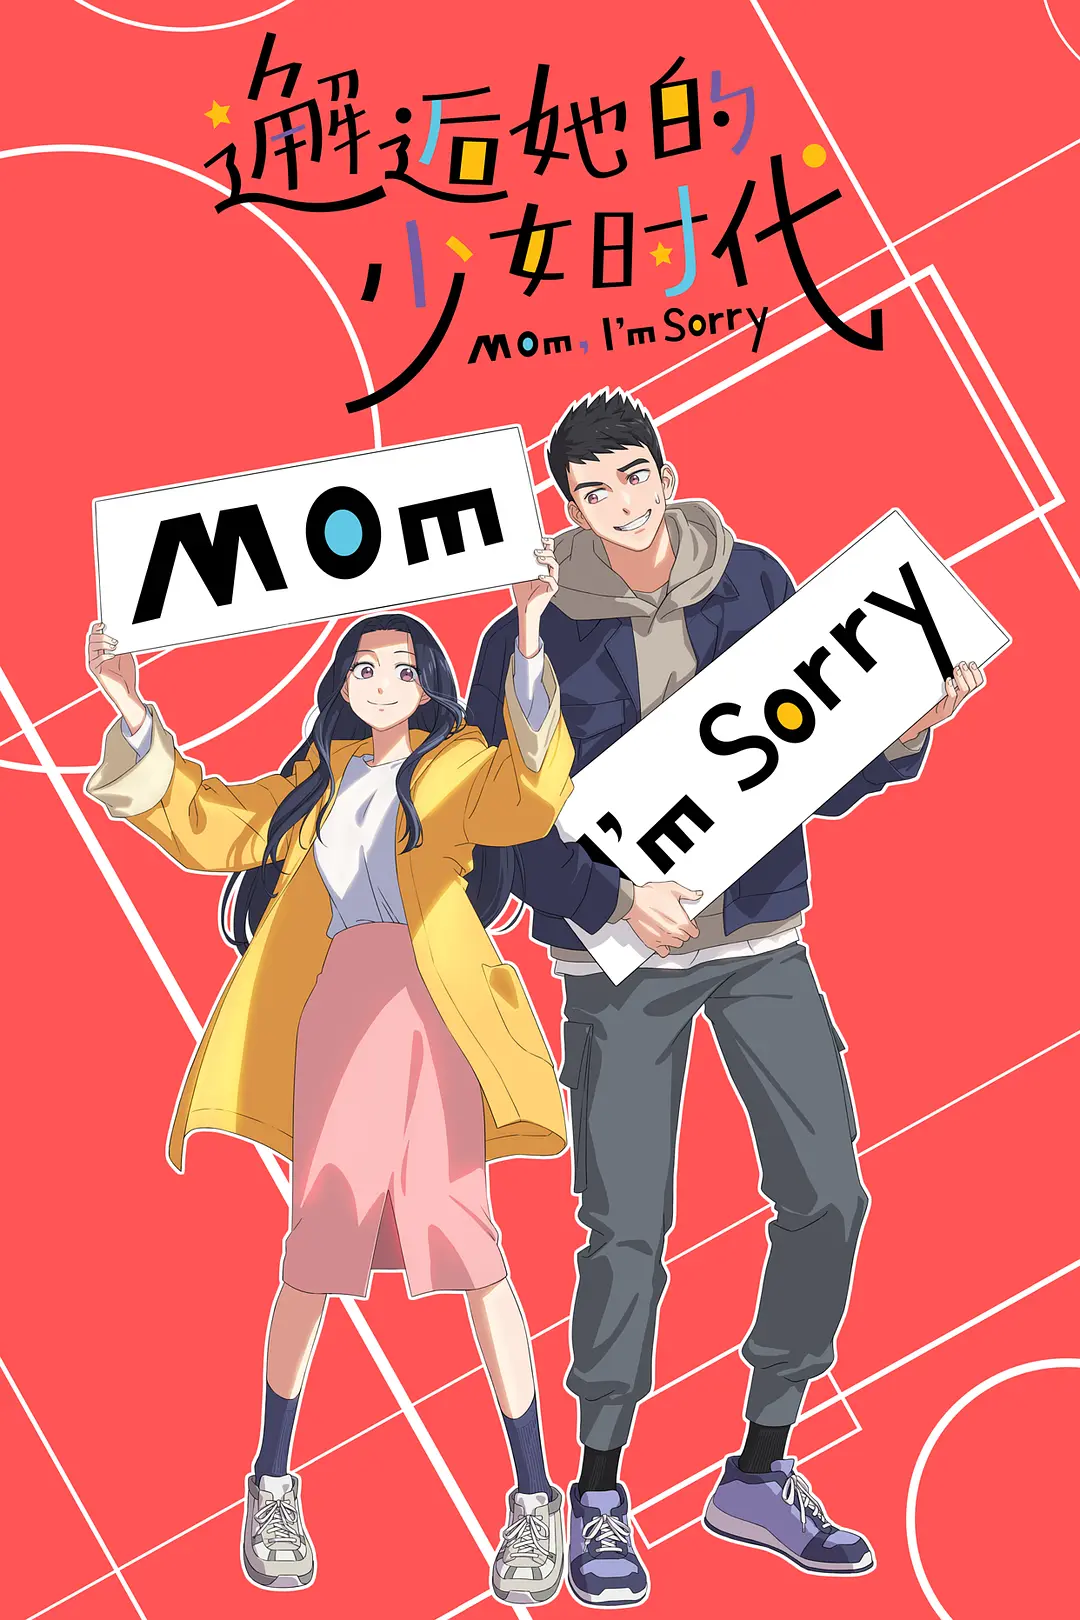 Mom, I’m Sorry Episode 06 Subtitle Indonesia